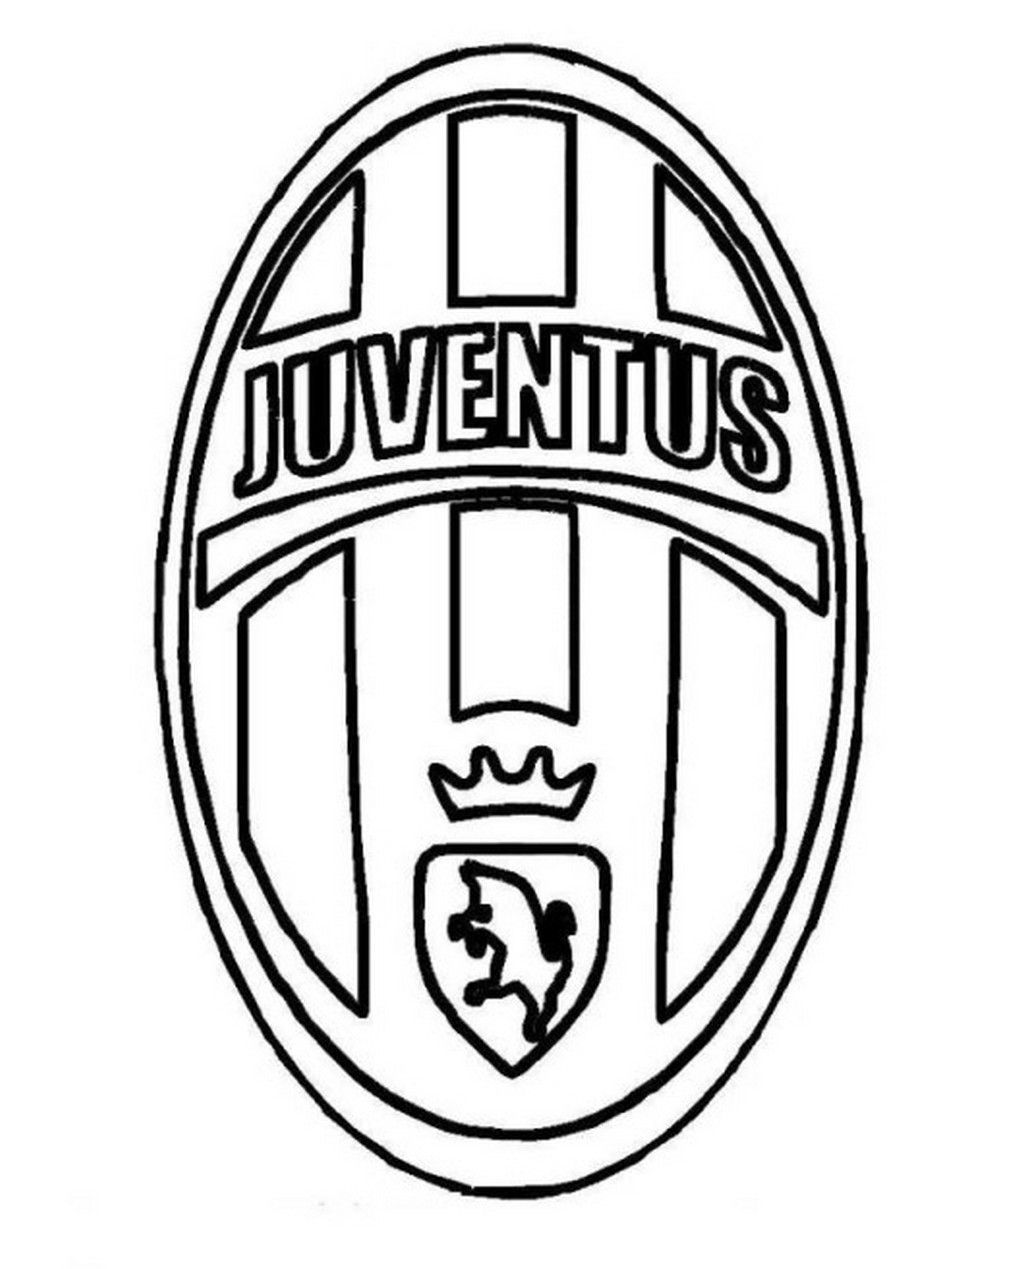 Juventus Turyn herb kolorowanka do drukowania